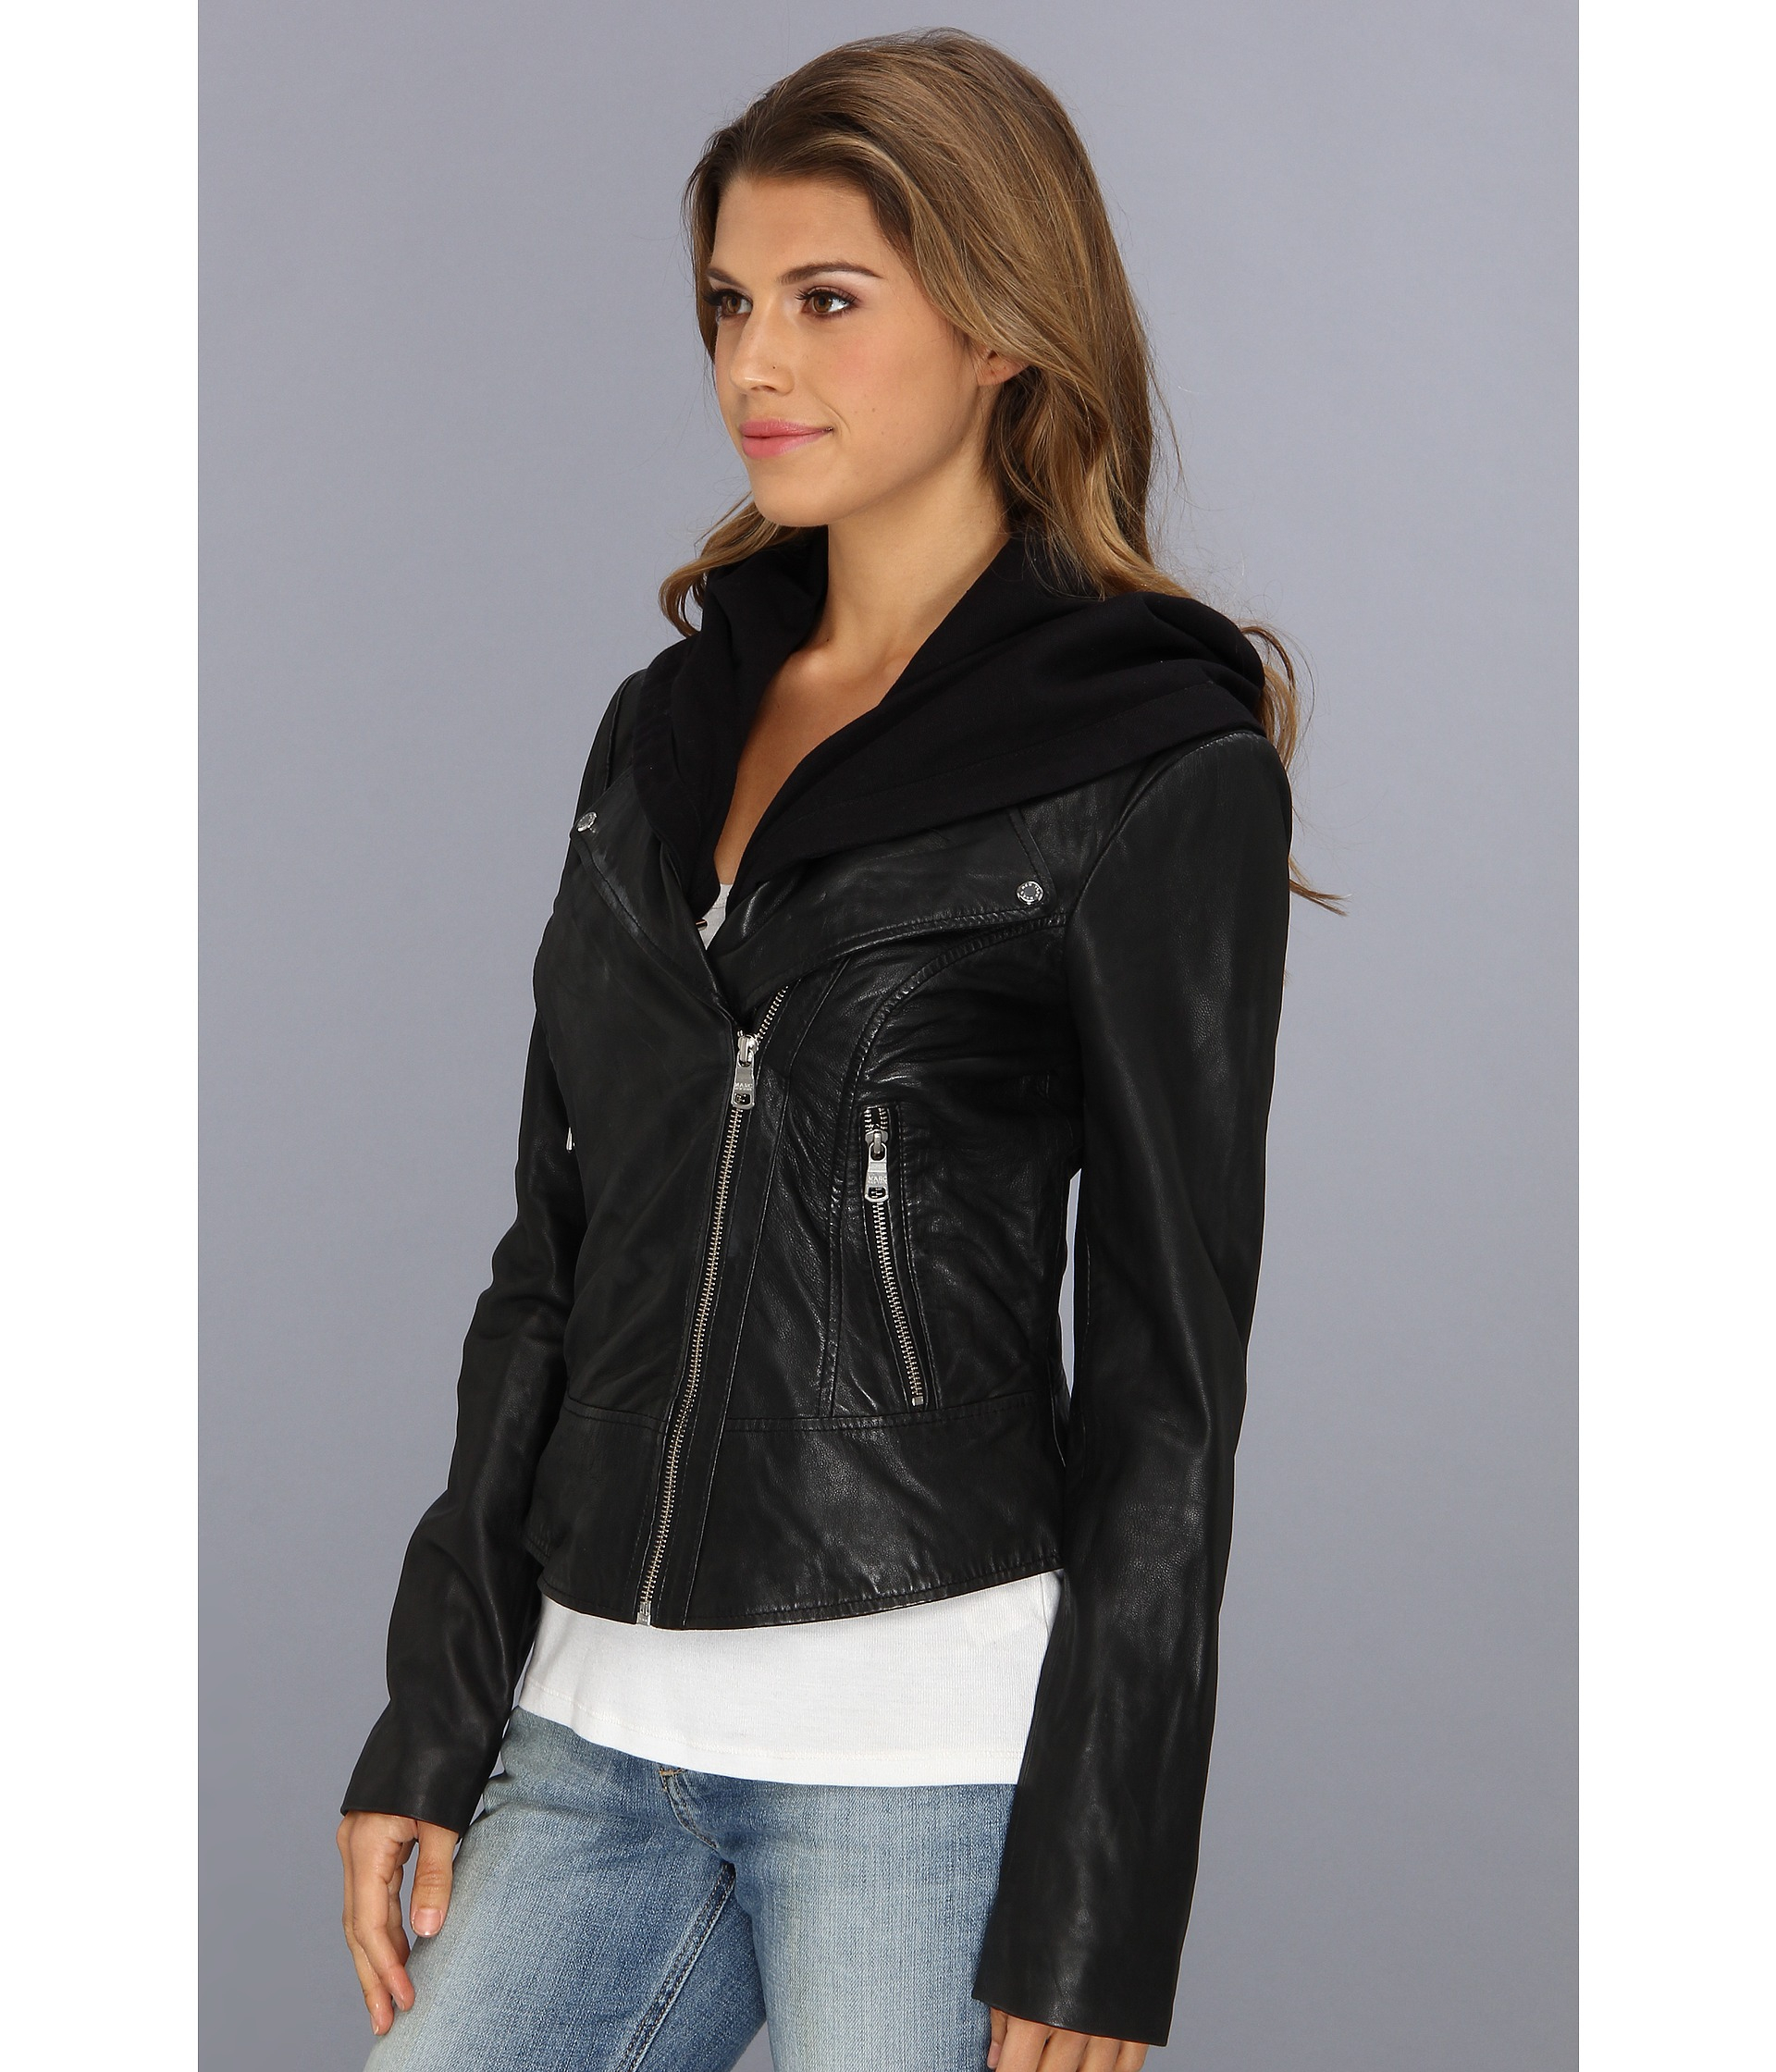 marc new york andrew marc black leather jacket